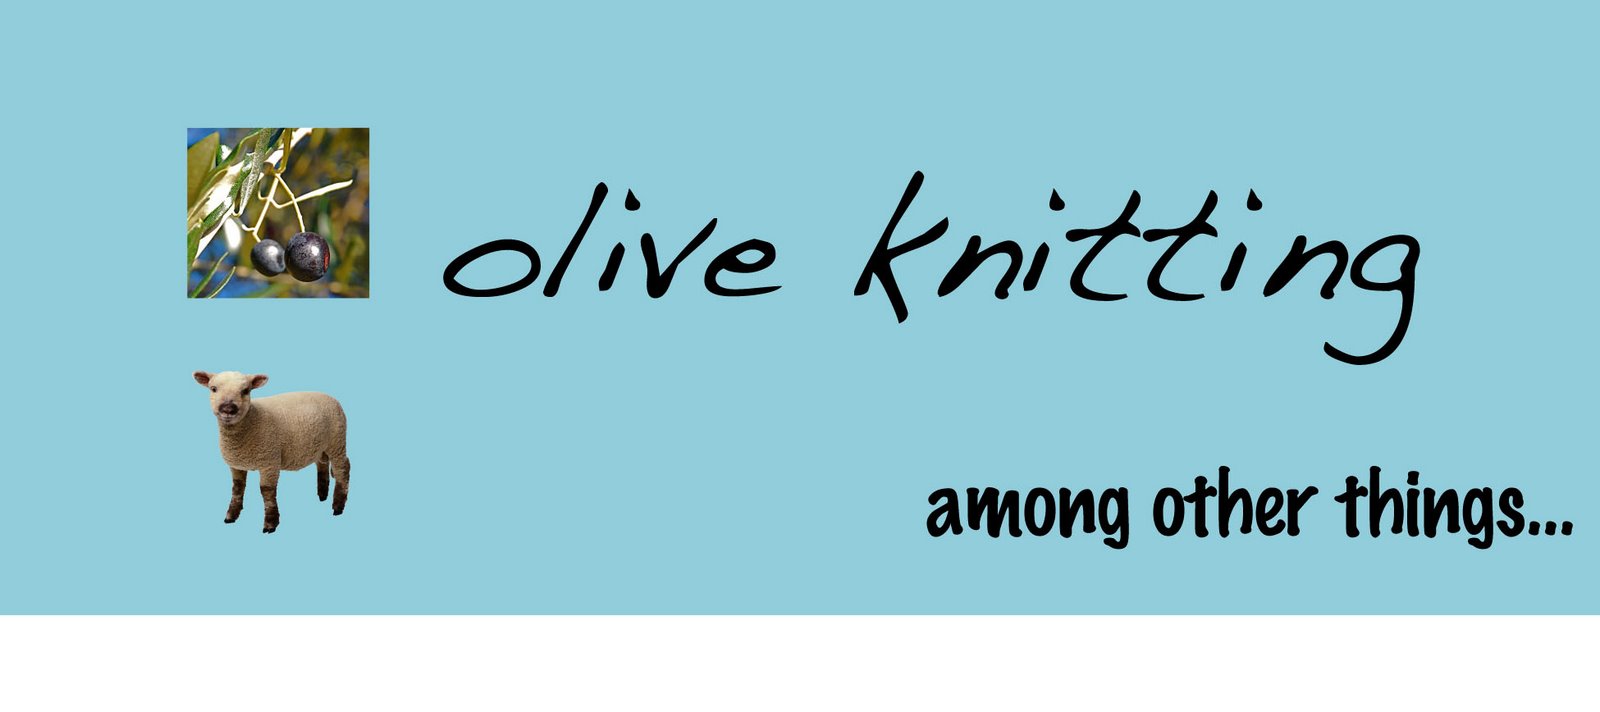 Olive Knitting